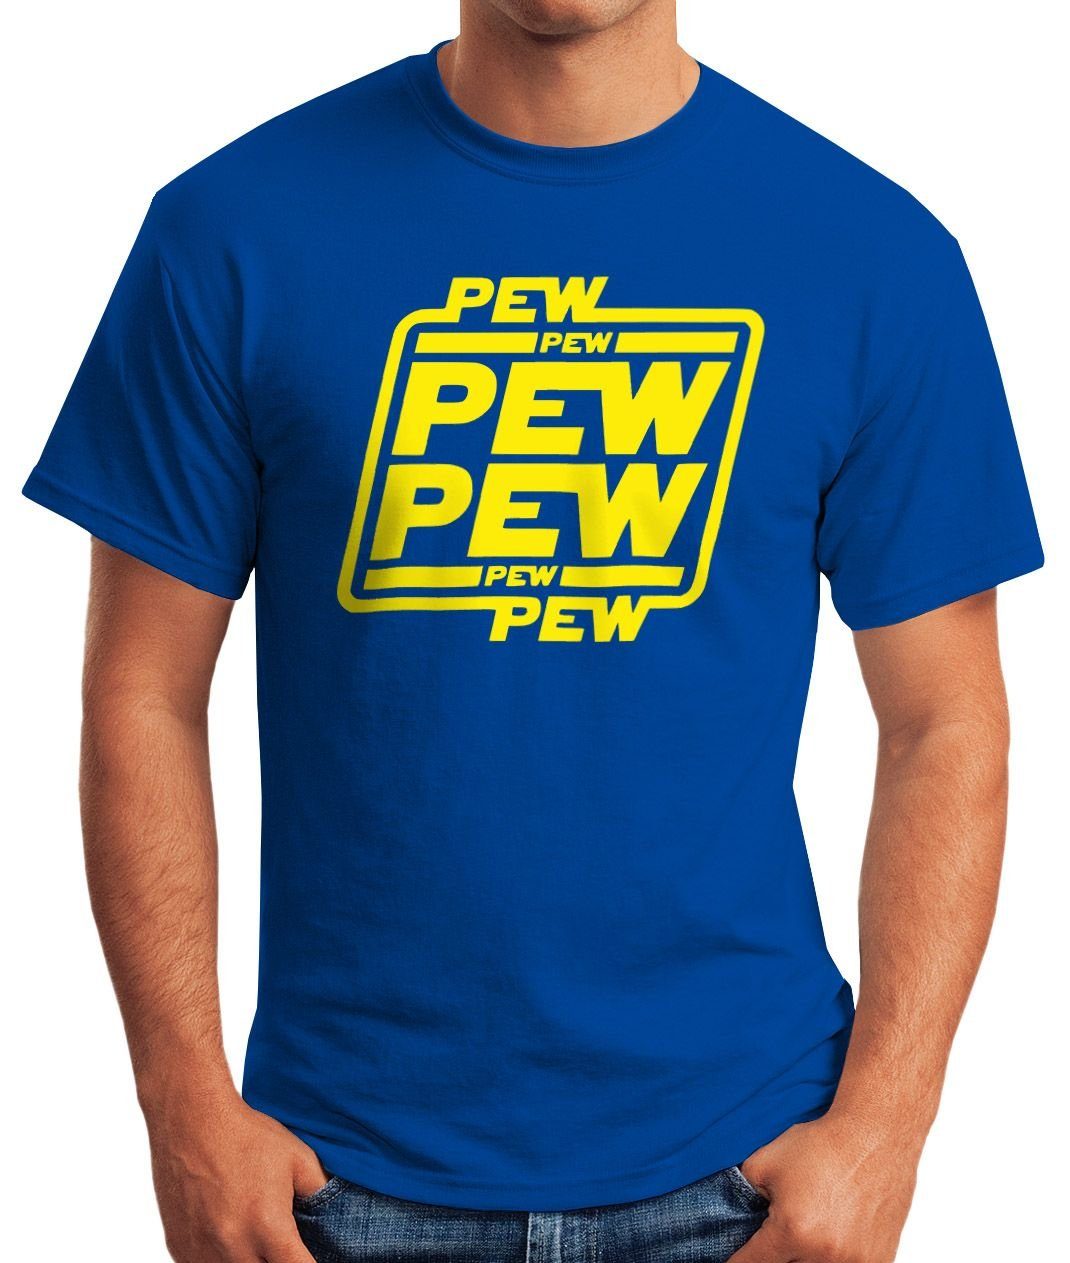 MoonWorks Print-Shirt Herren T-Shirt mit Moonworks® Fun-Shirt blau Print Pew Pew Pew